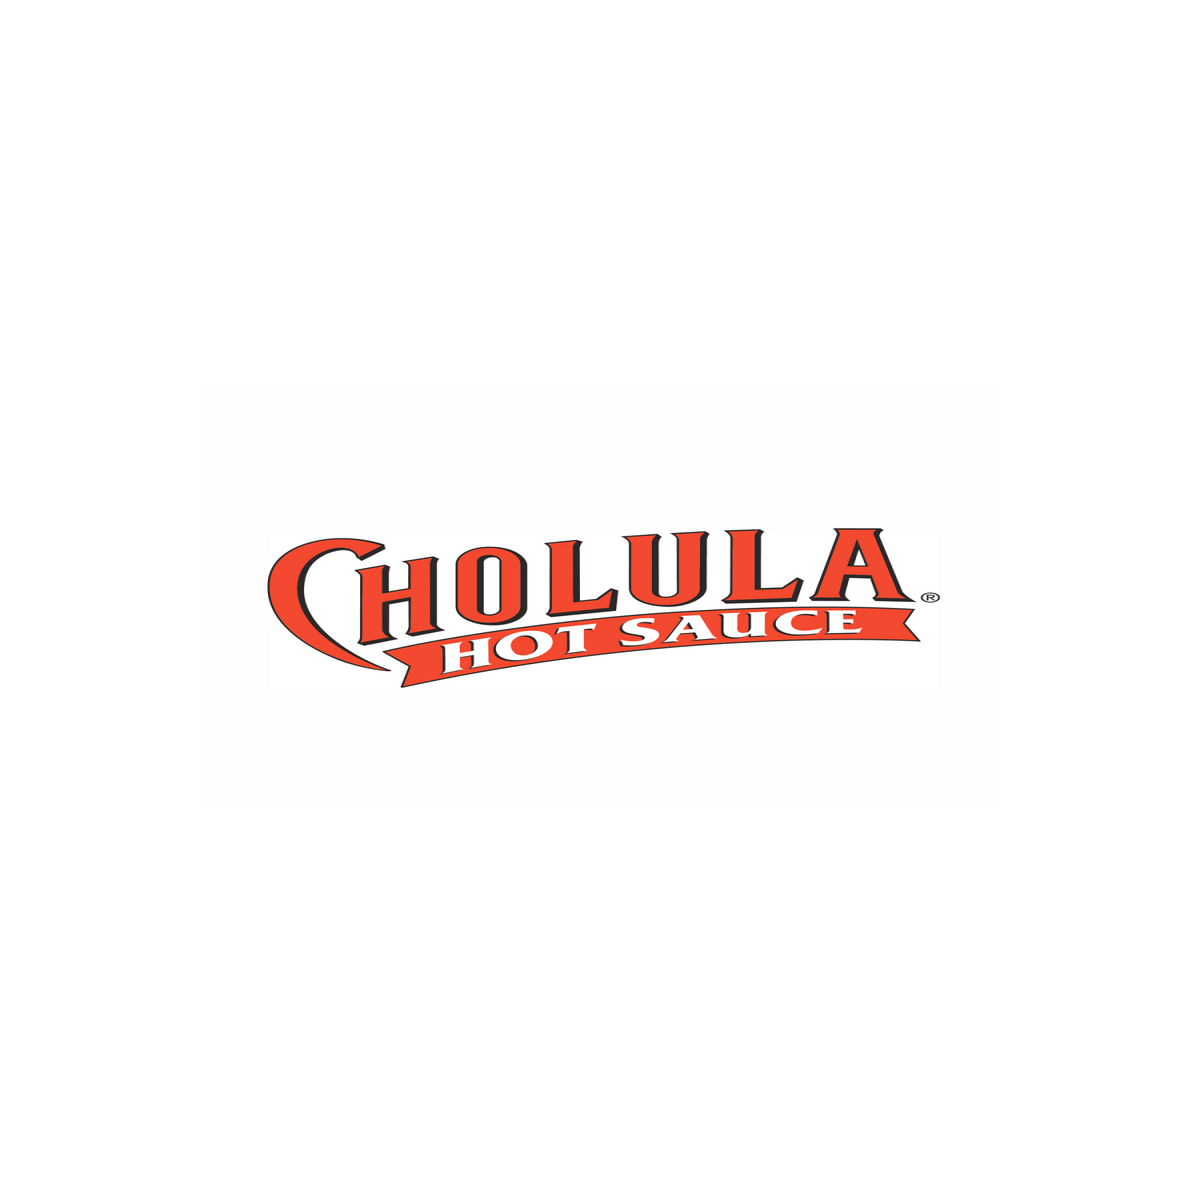 Where to Buy Cholula